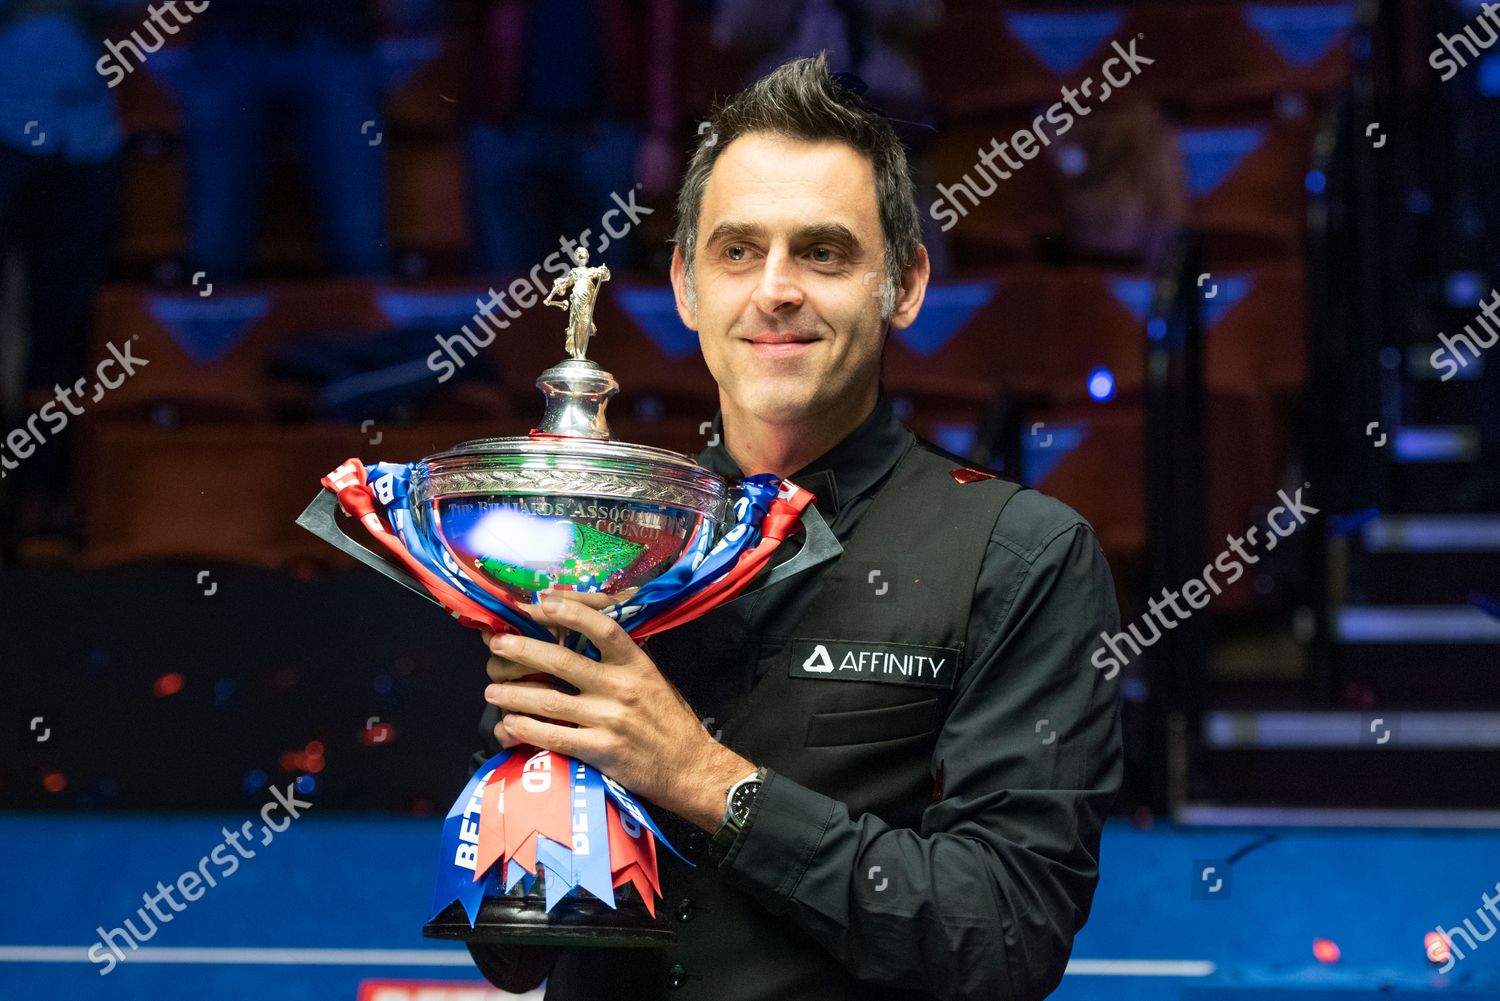 Ronnie wins 2020 World Championship 庫存圖片| Shutterstock